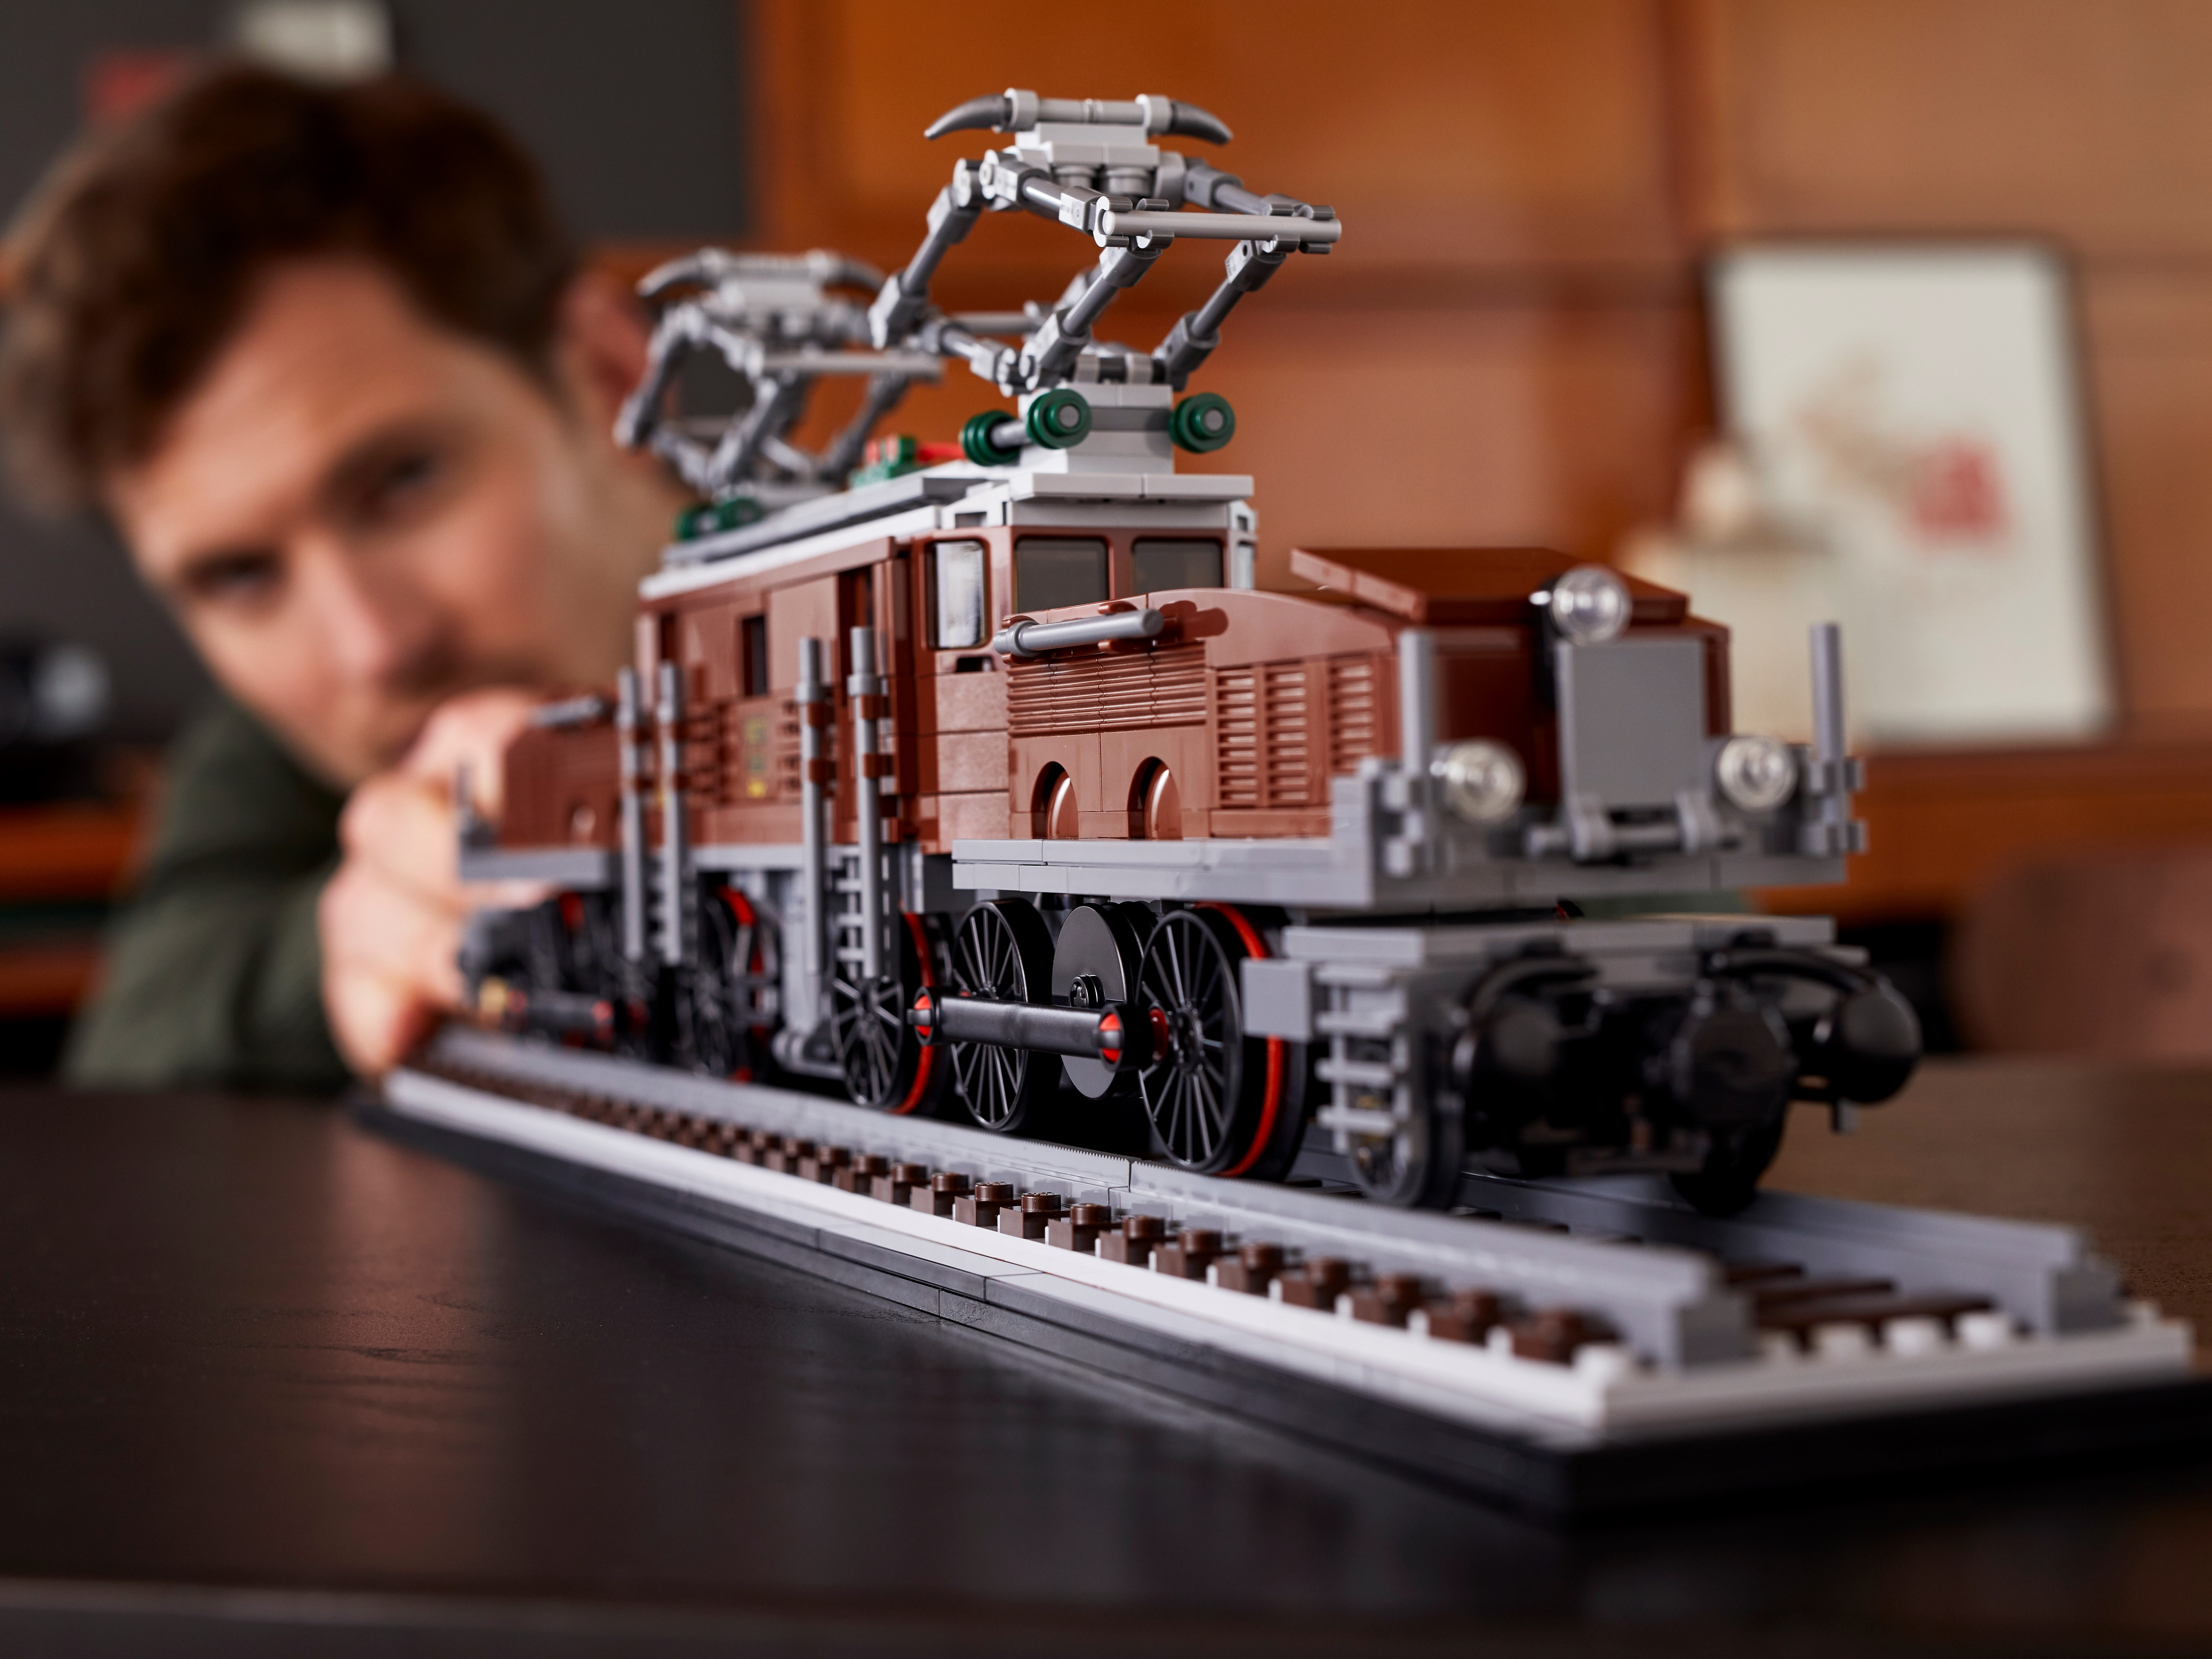 10277 Crocodile Locomotive is the newest LEGO train set for adults